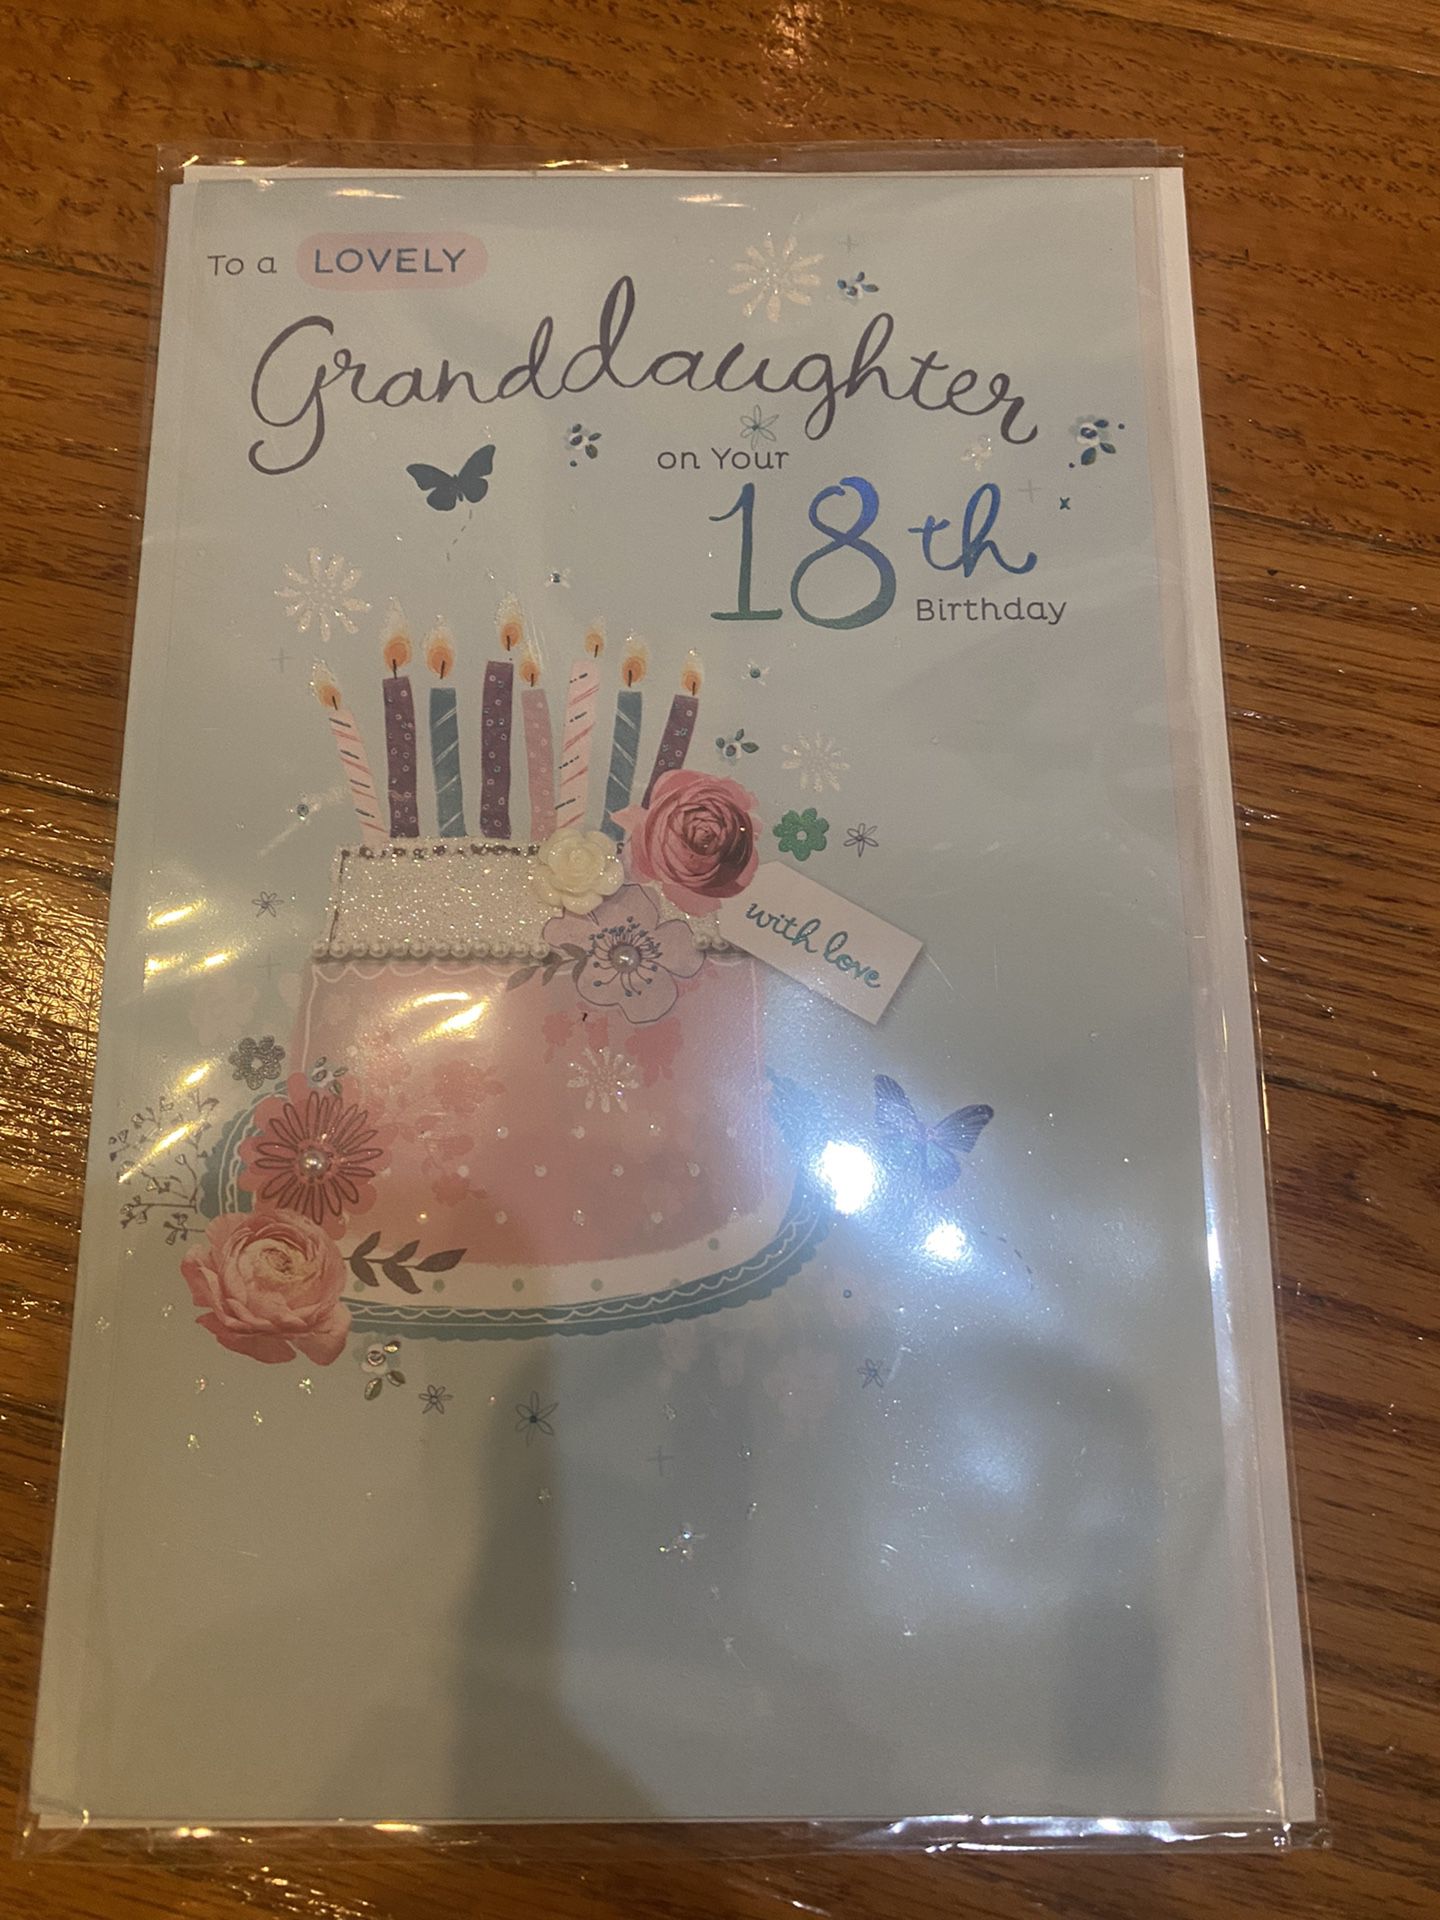 Carlton Granddaughter 18th Birthday Card - New